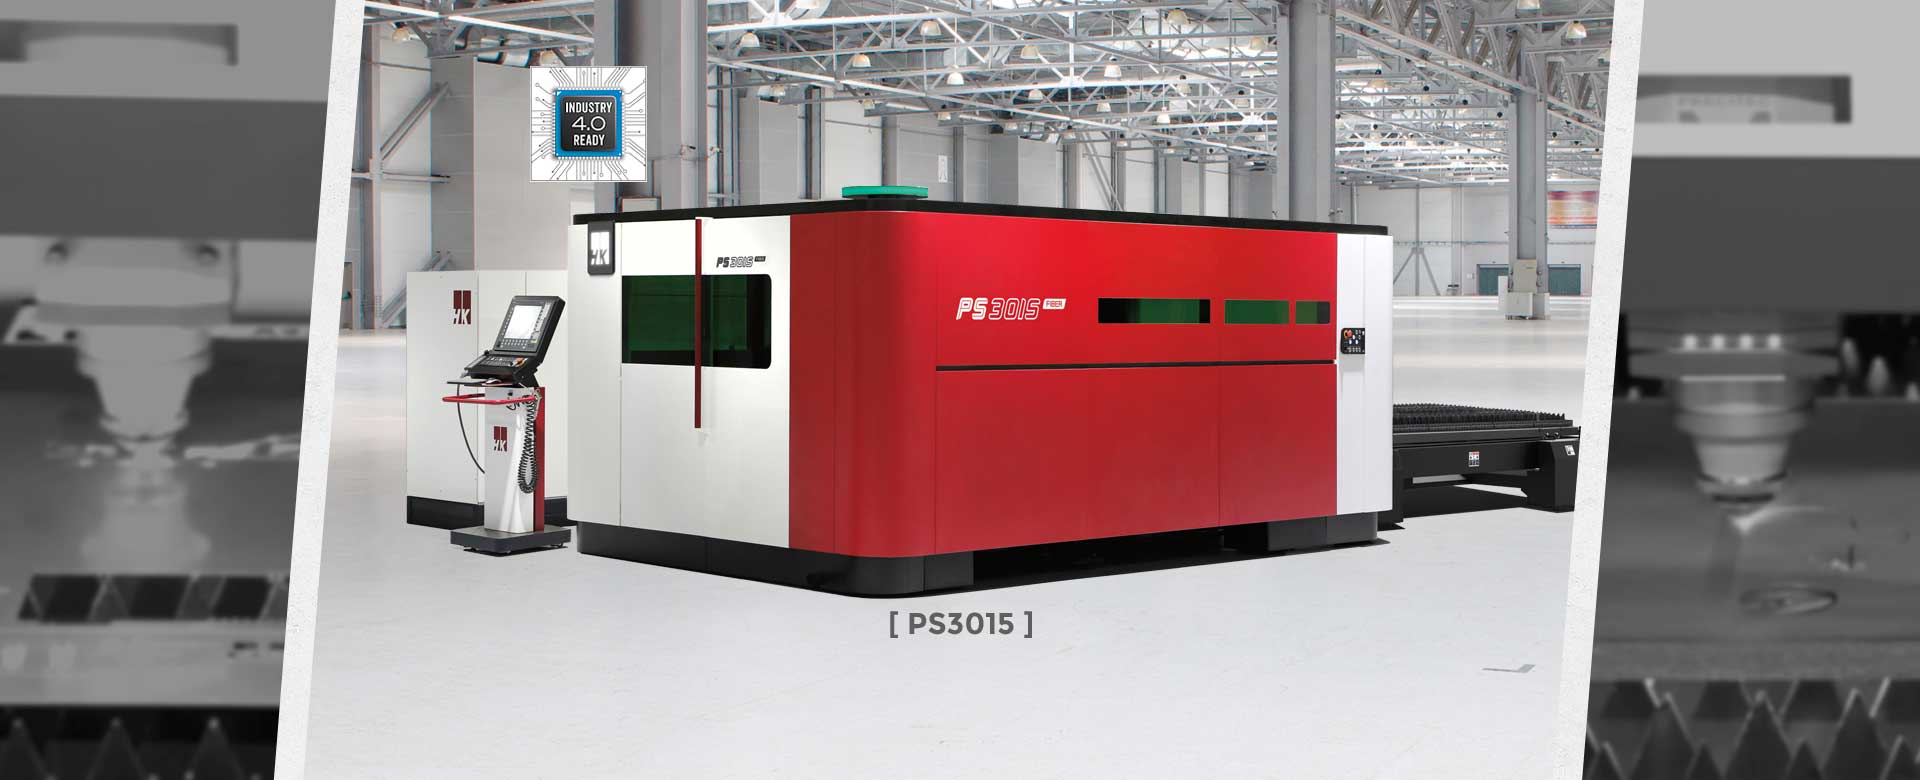 HK PS Series PS3015 Fiber Laser Cutting System